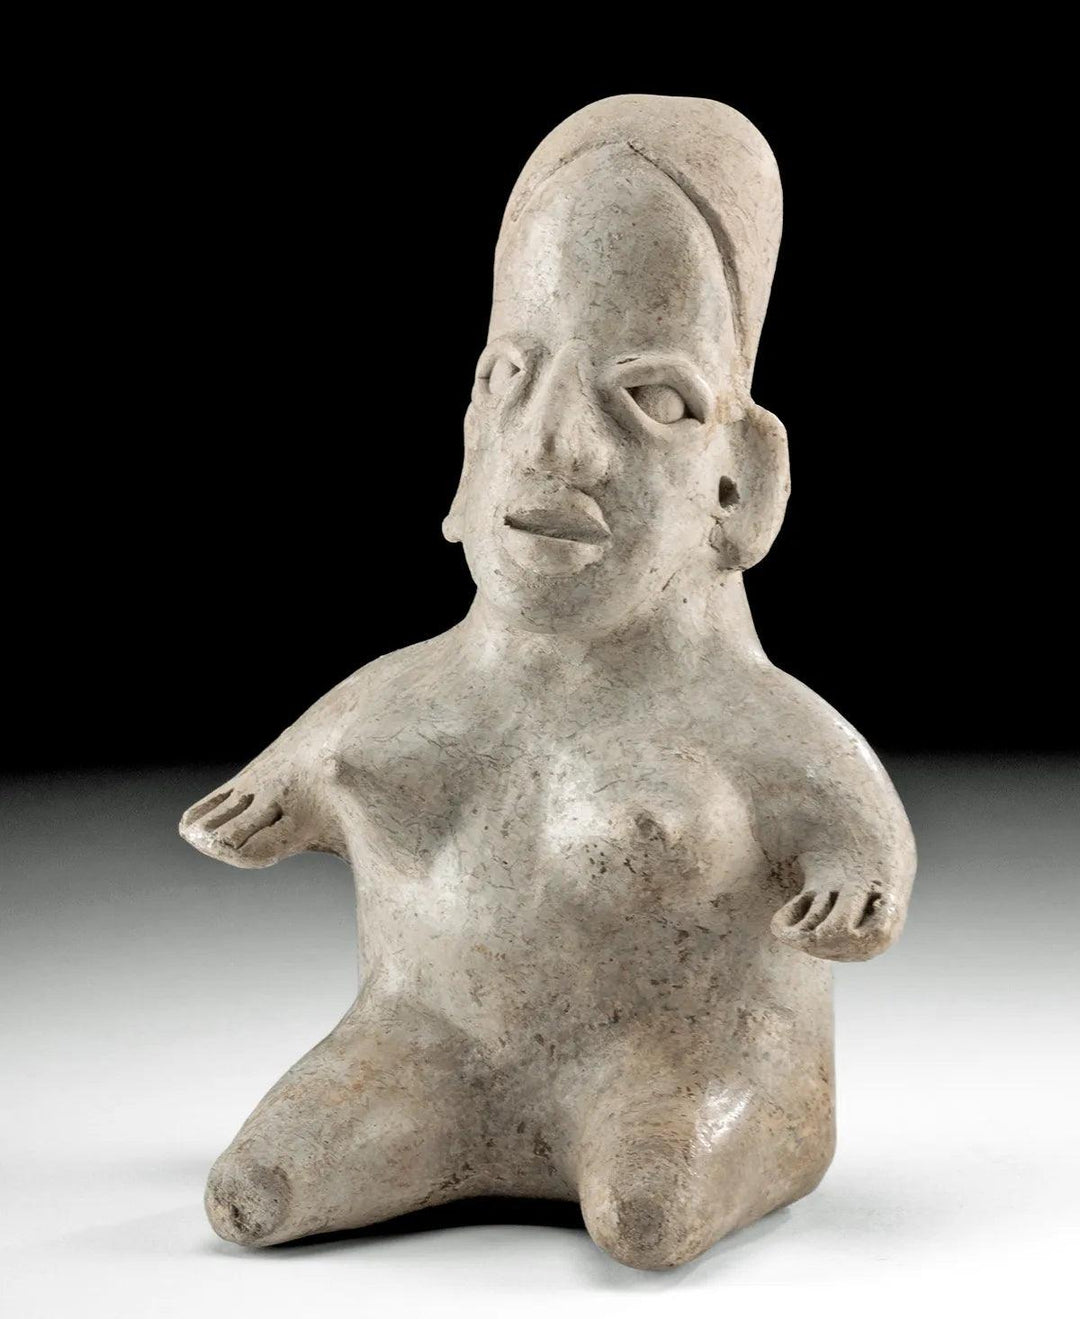 Jalisco Pottery Female Figure - 4th Century BCE to 3rd Century CE | Bonham's Auction